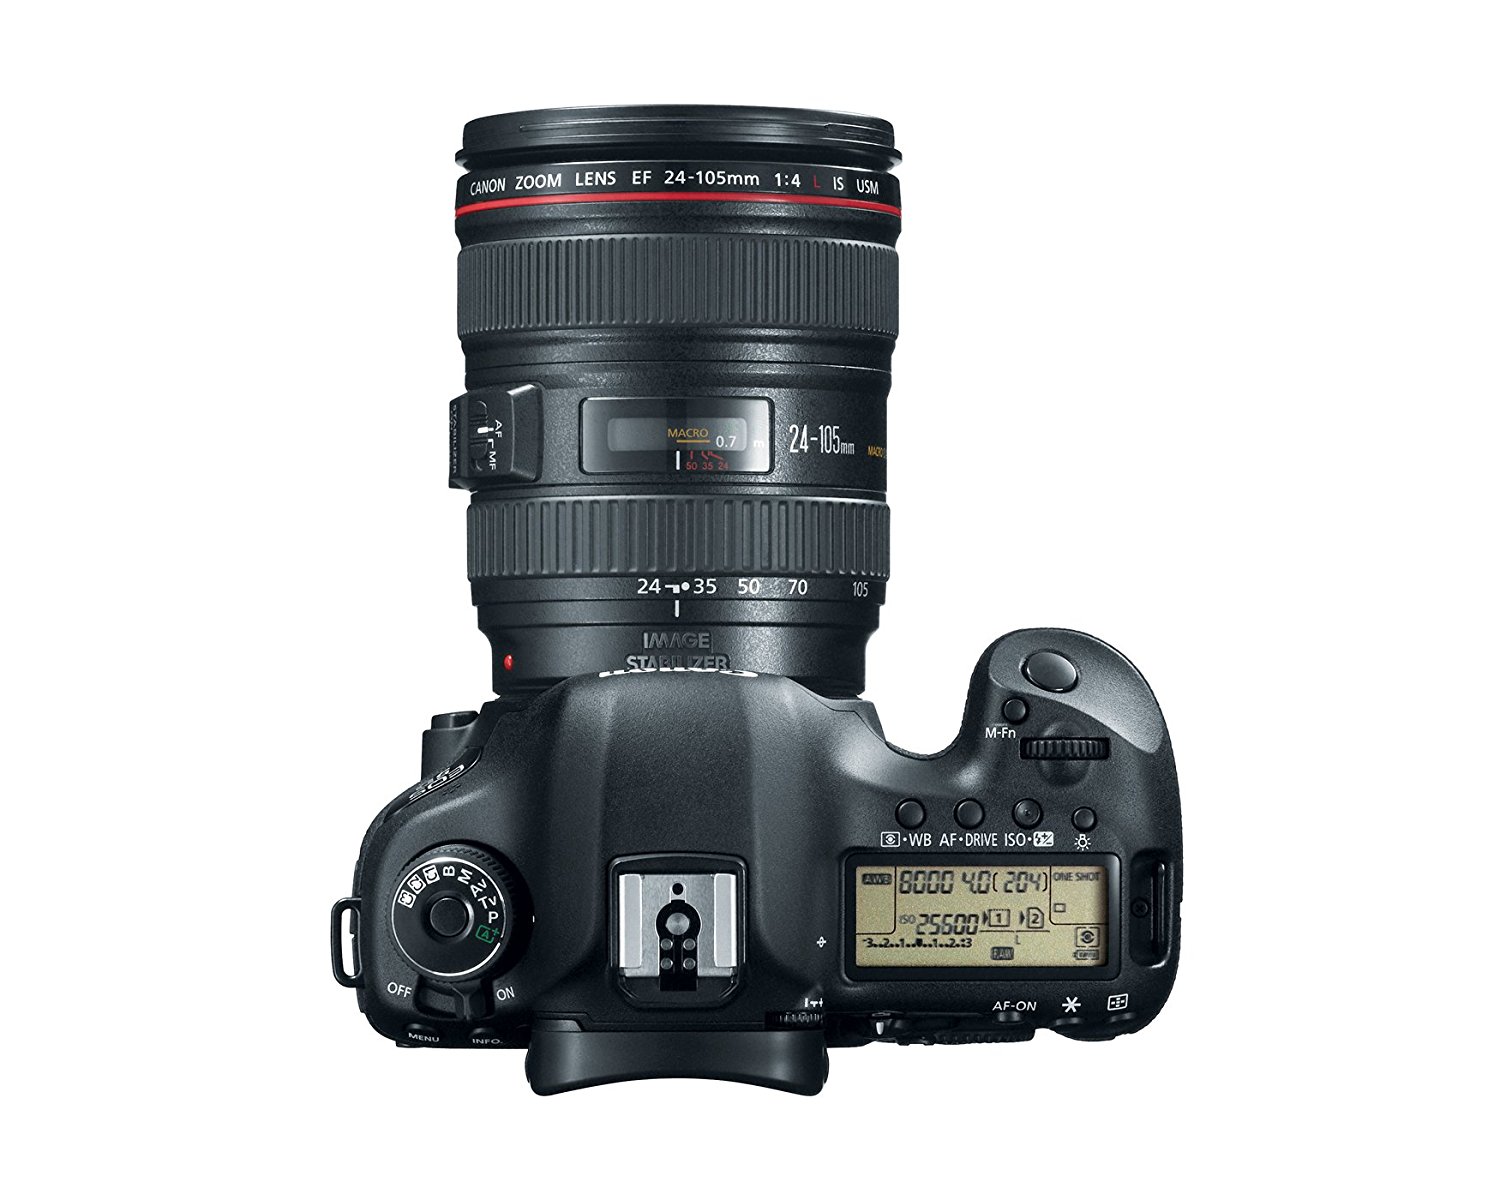 Canon EOS 5D Mark III 22.3 MP Full Frame CMOS Digital SLR Camera Best